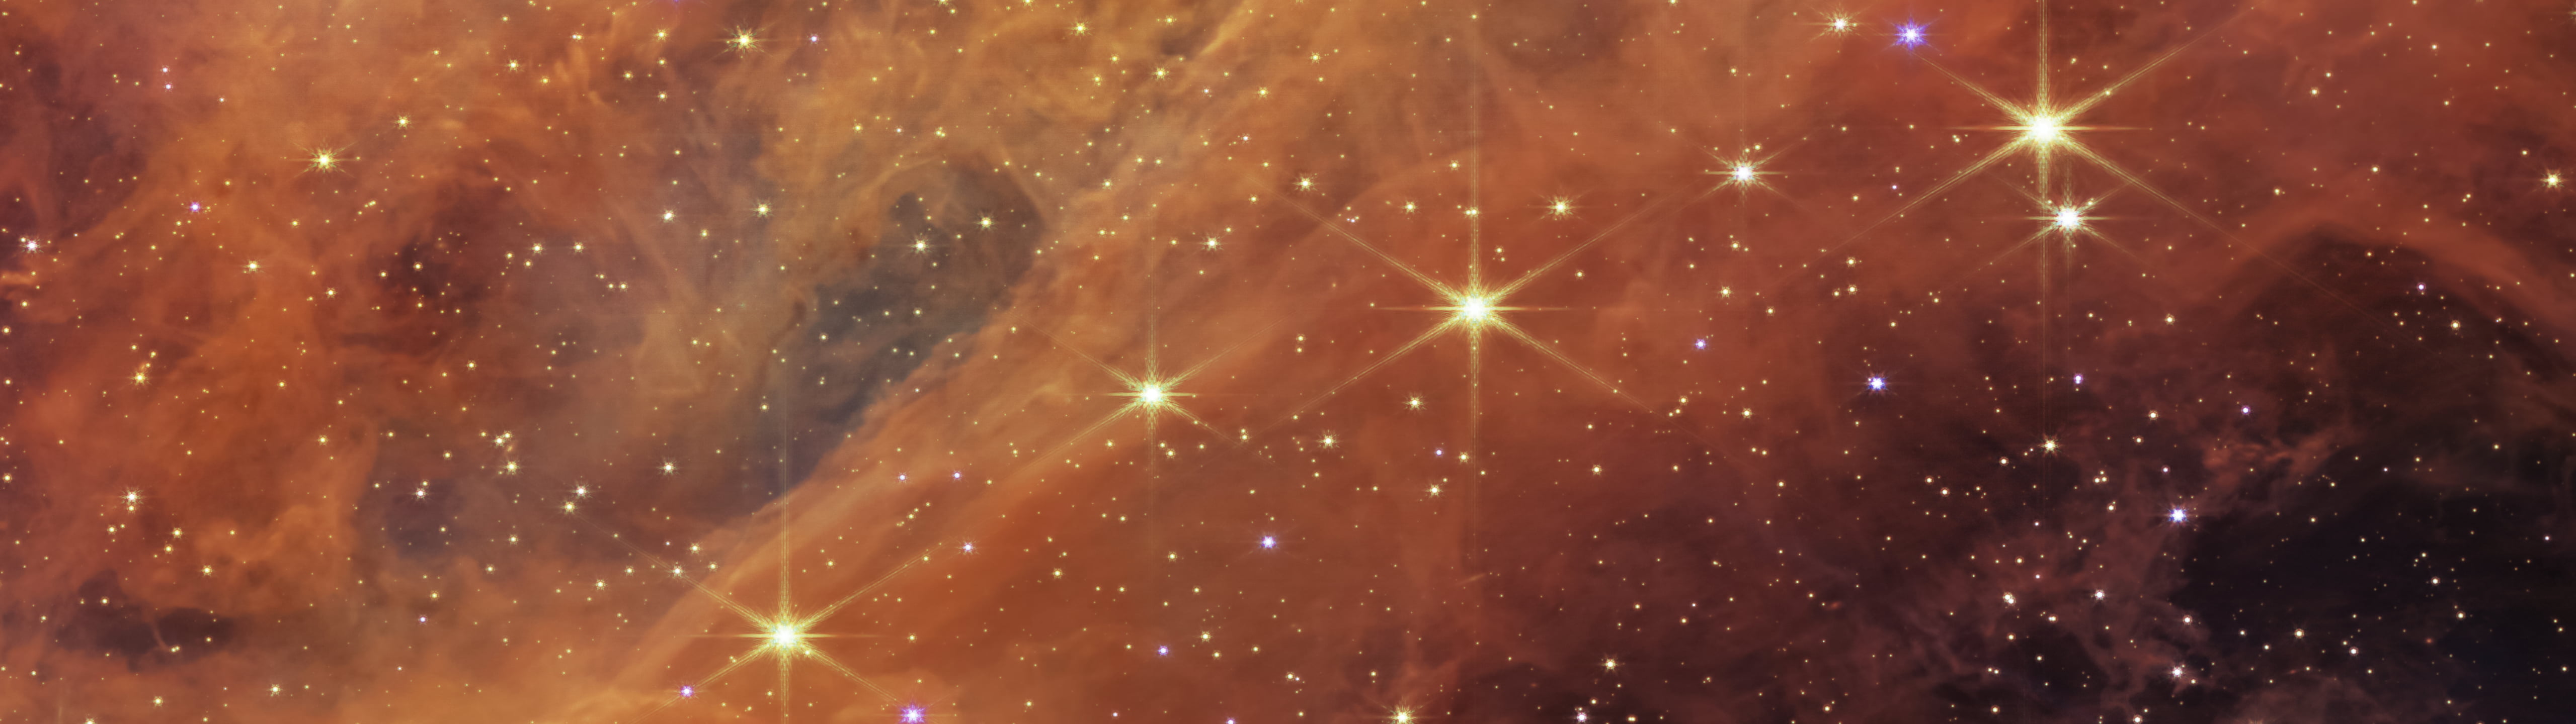 space, James Webb Space Telescope, nebula, Carina Nebula, NASA